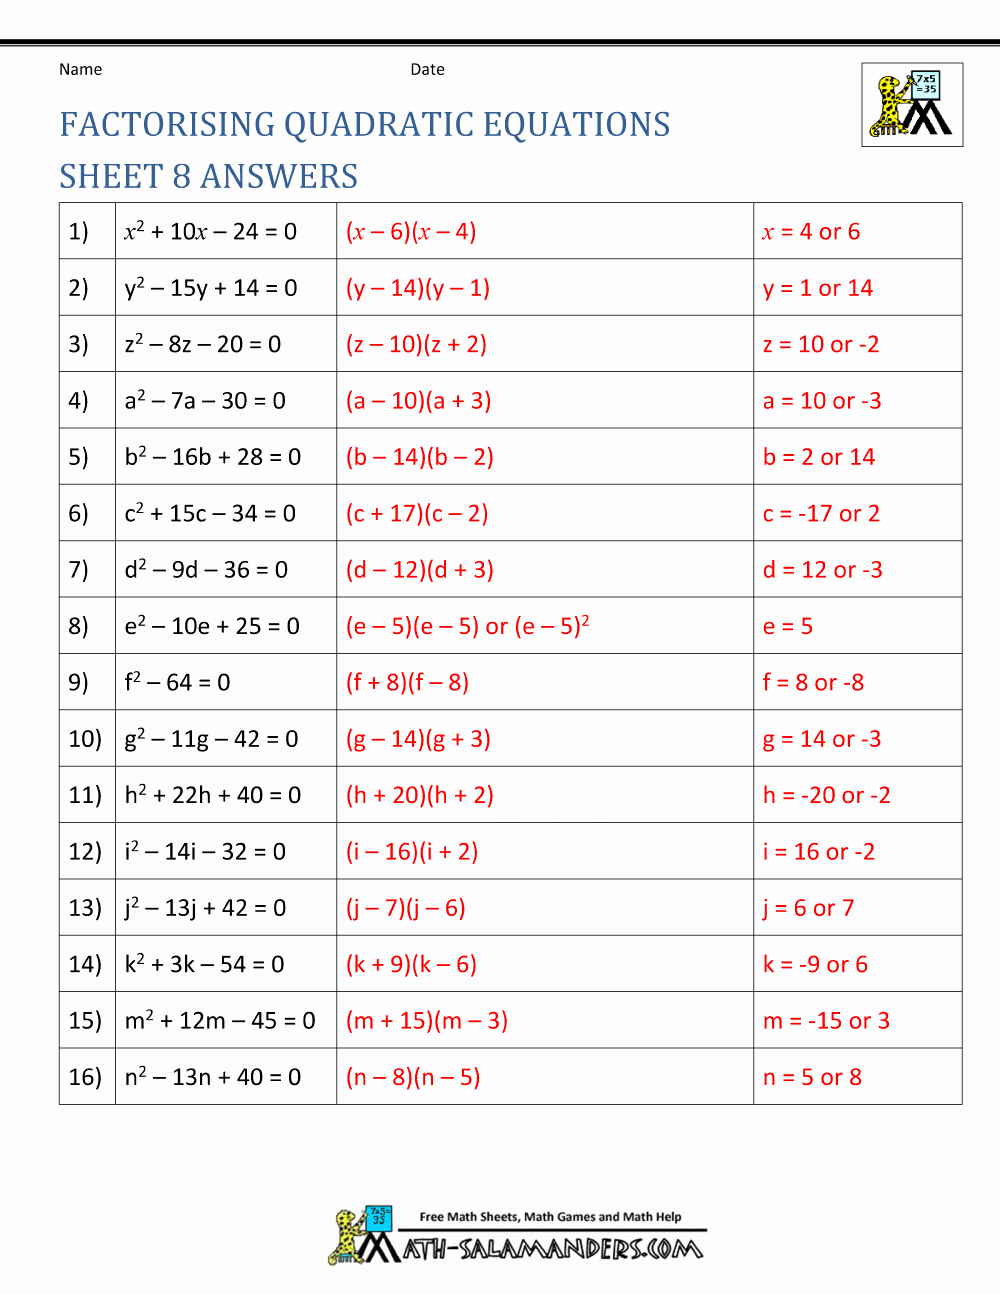 Factoring Quadratics Worksheet Answers Awesome Factoring Quadratic Equations